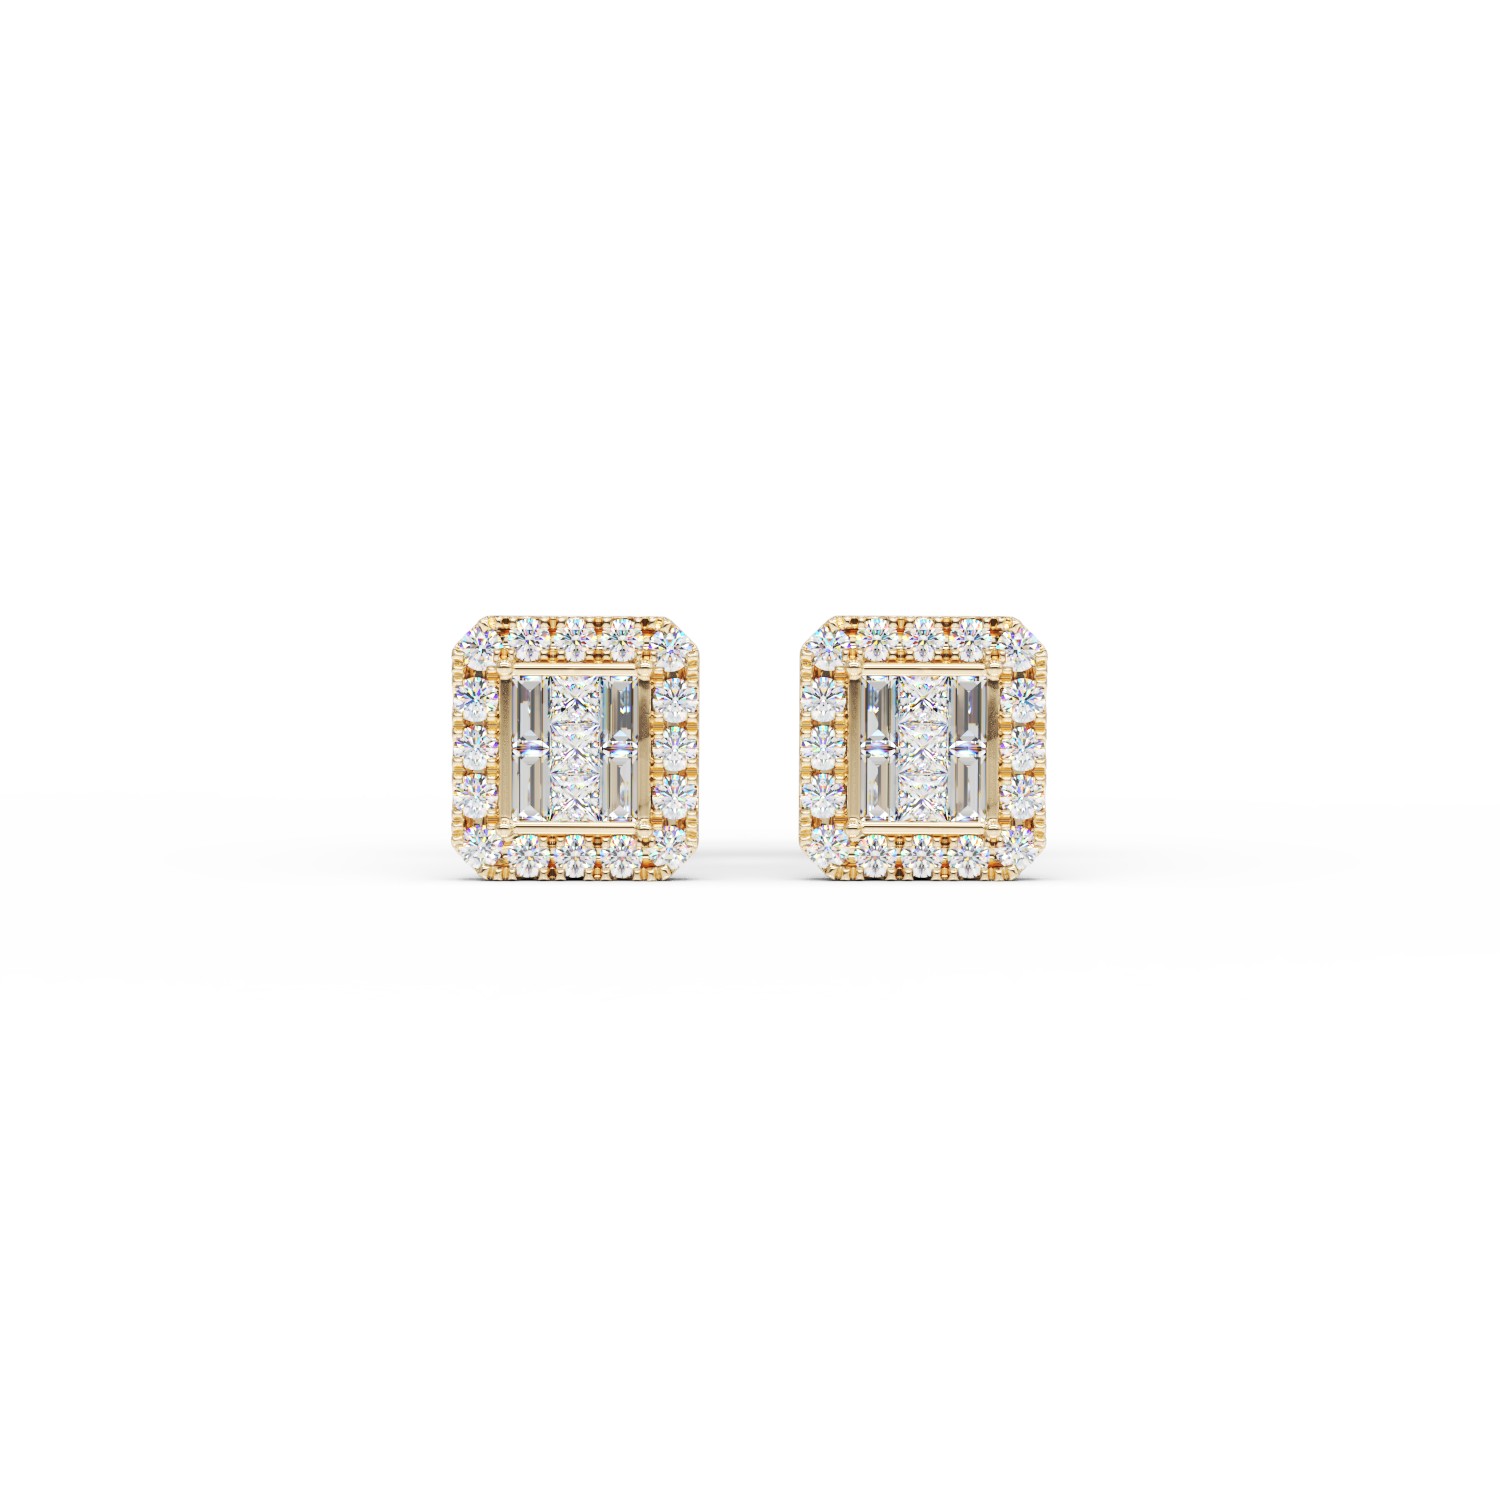 18K yellow gold earrings with 3.22ct diamonds